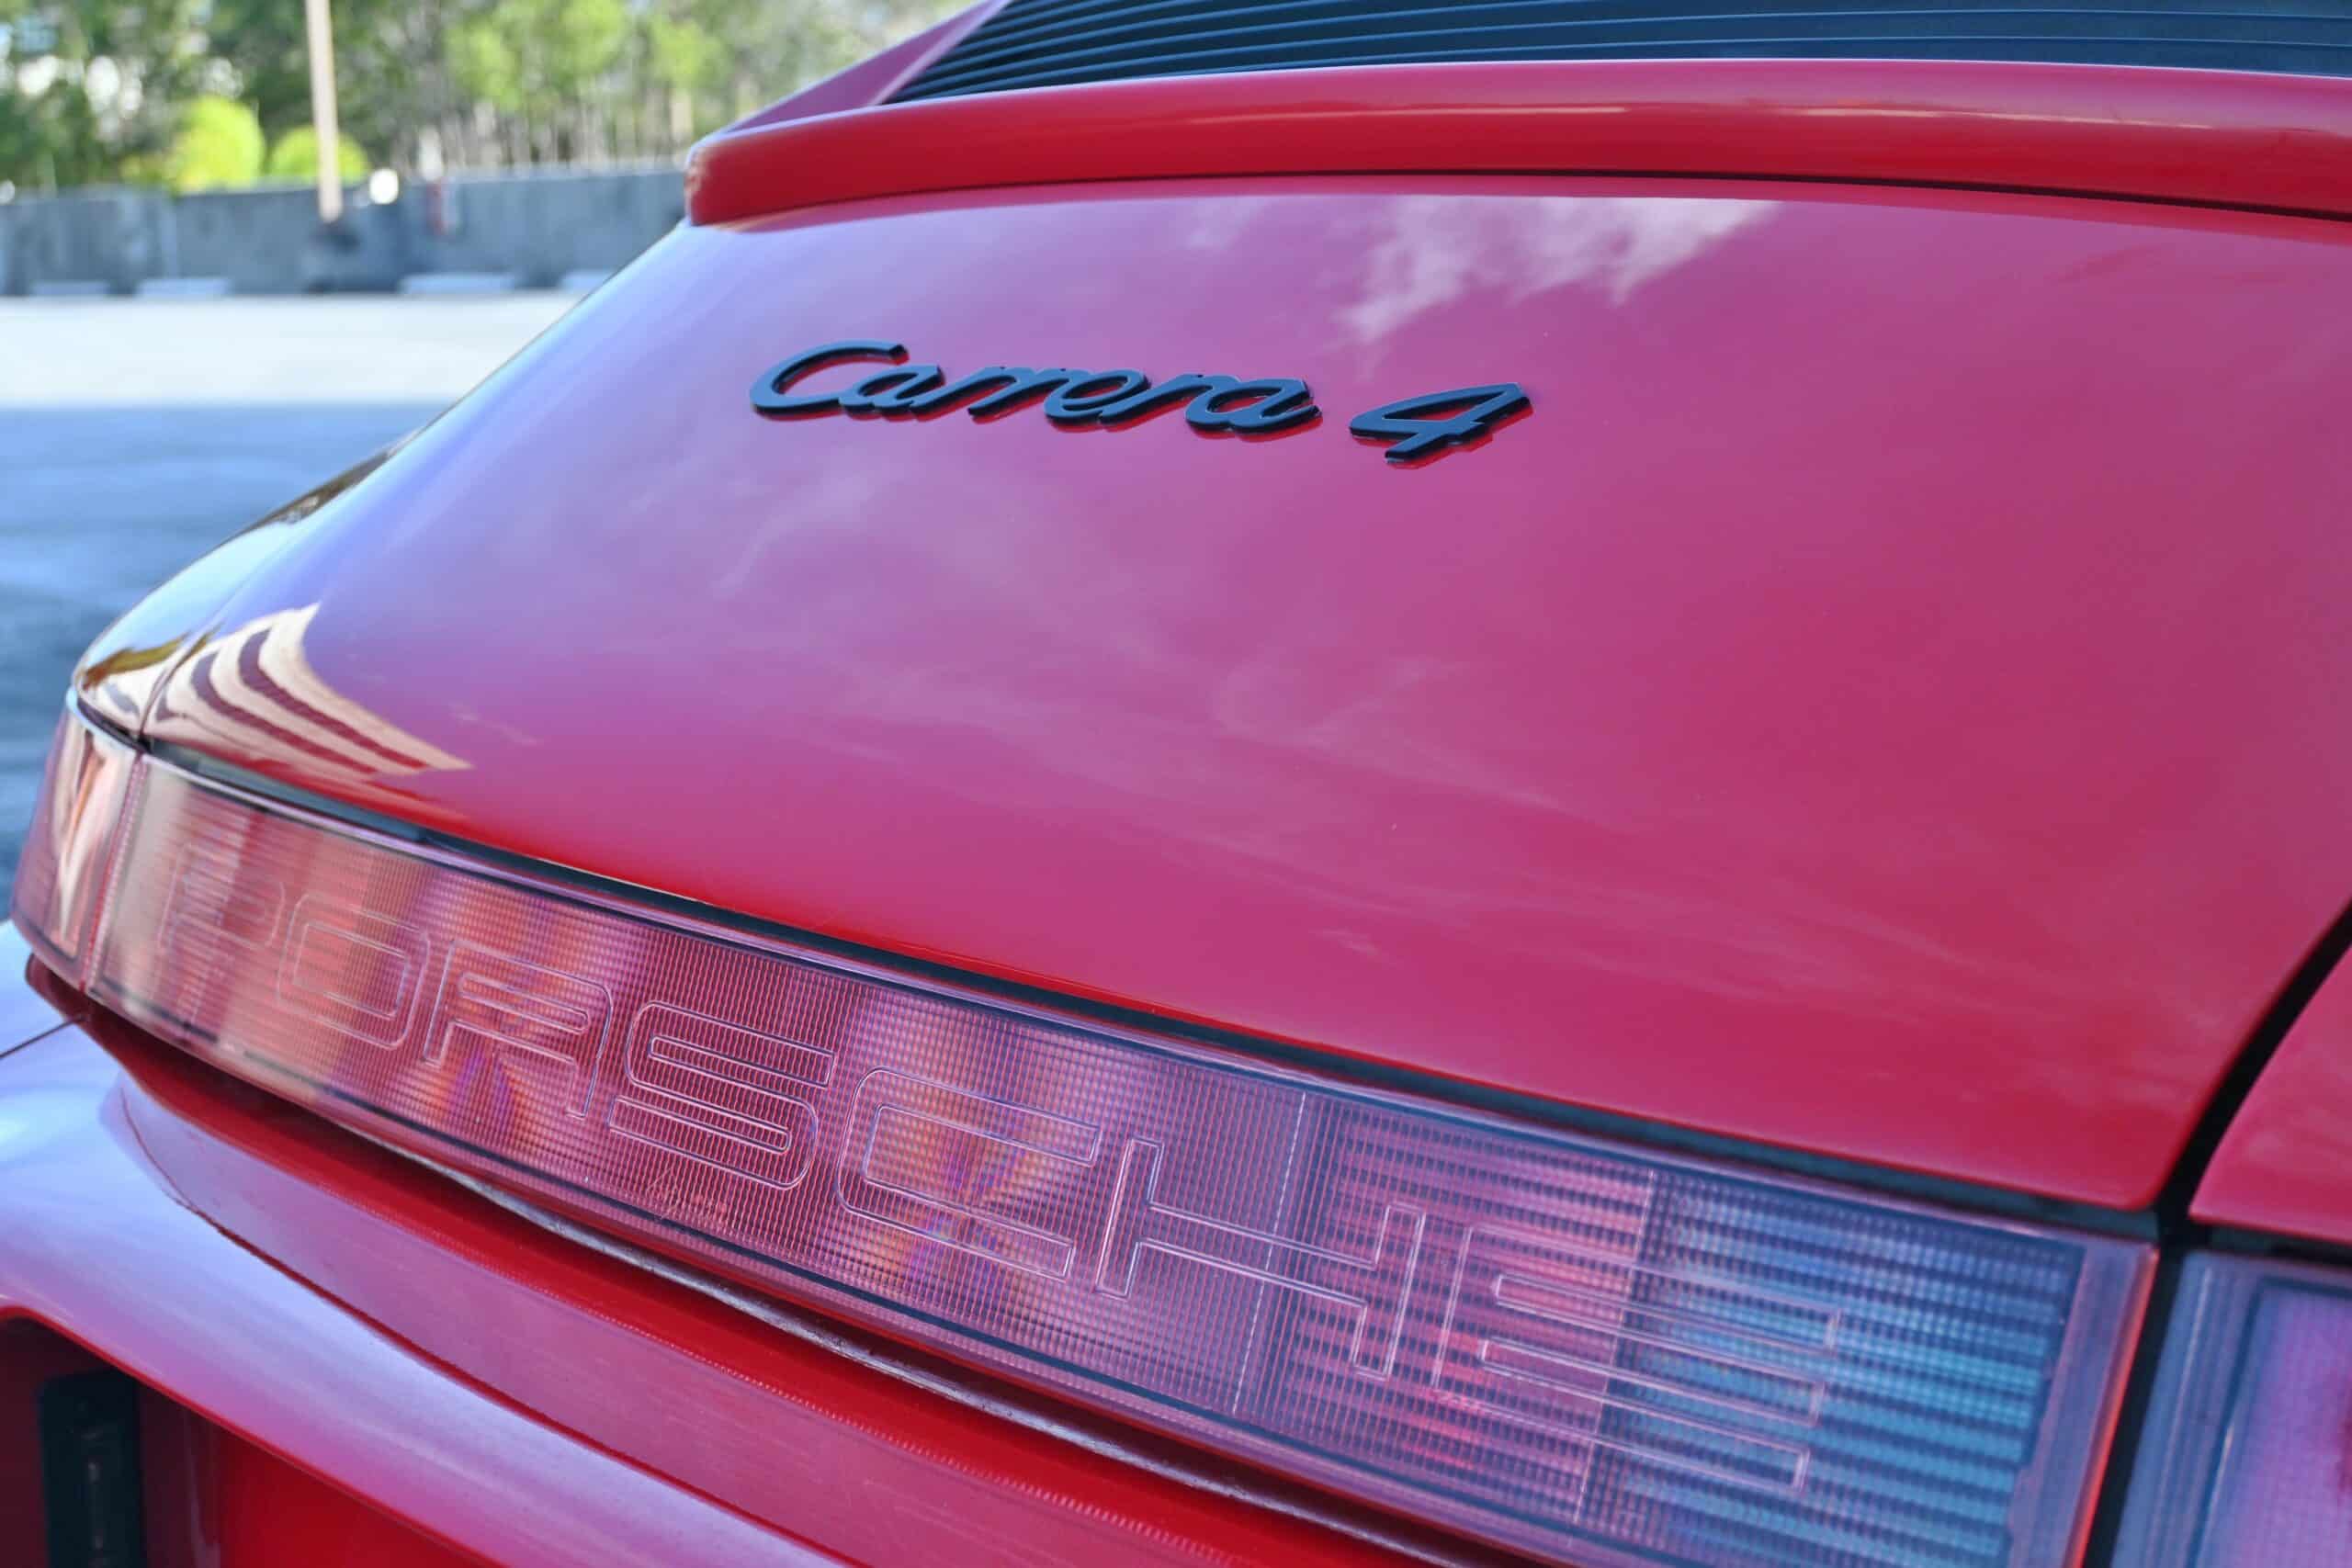 1989 Porsche 911 964 Carrera 4 California Car l 5 Speed Manual l Engine out Service l Documented Service History